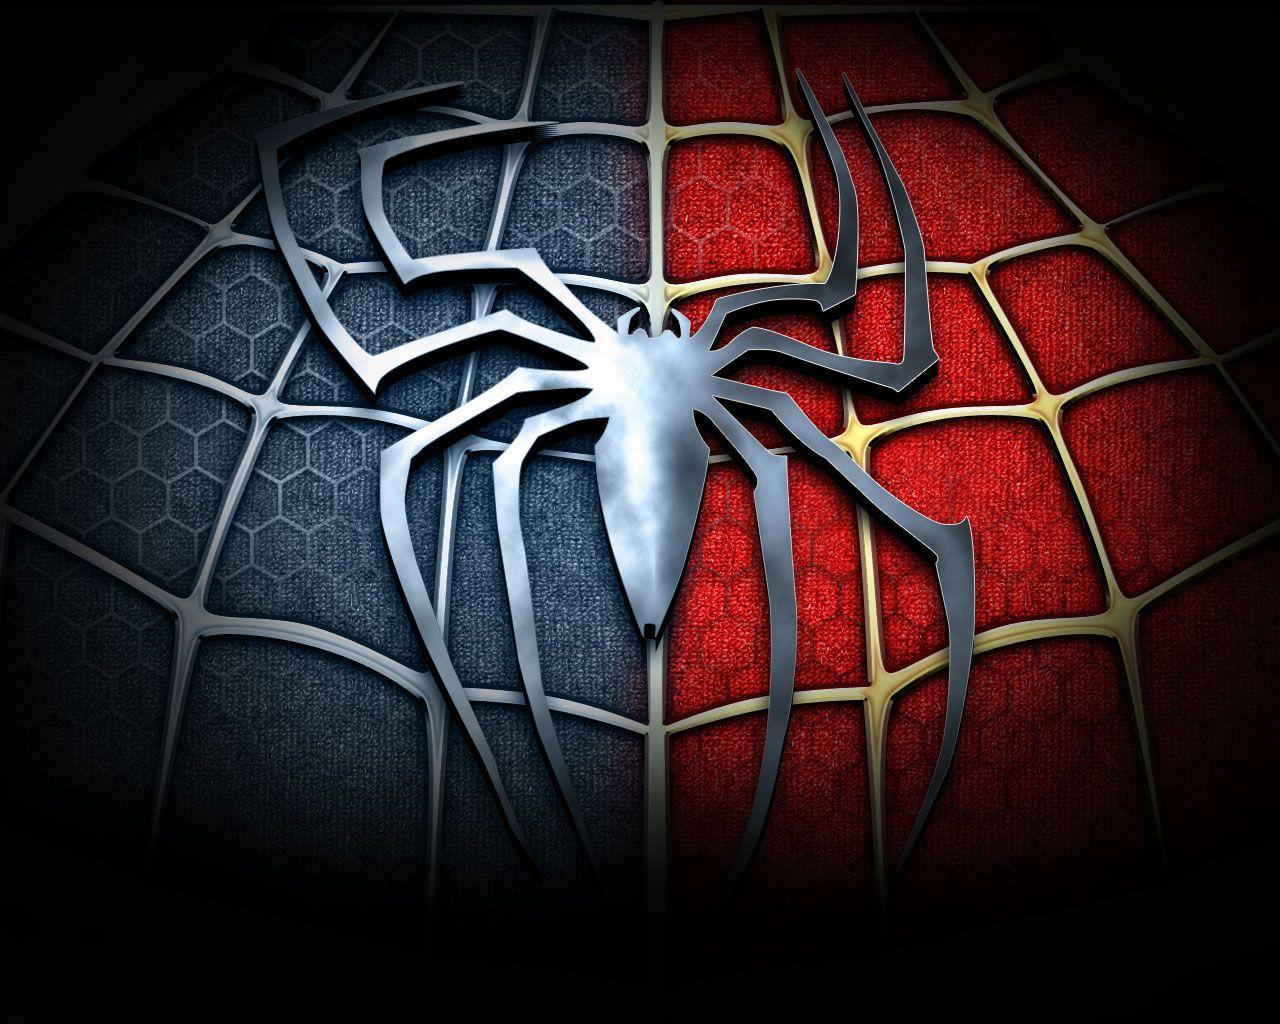 Spider man spider logo 4K wallpaper download